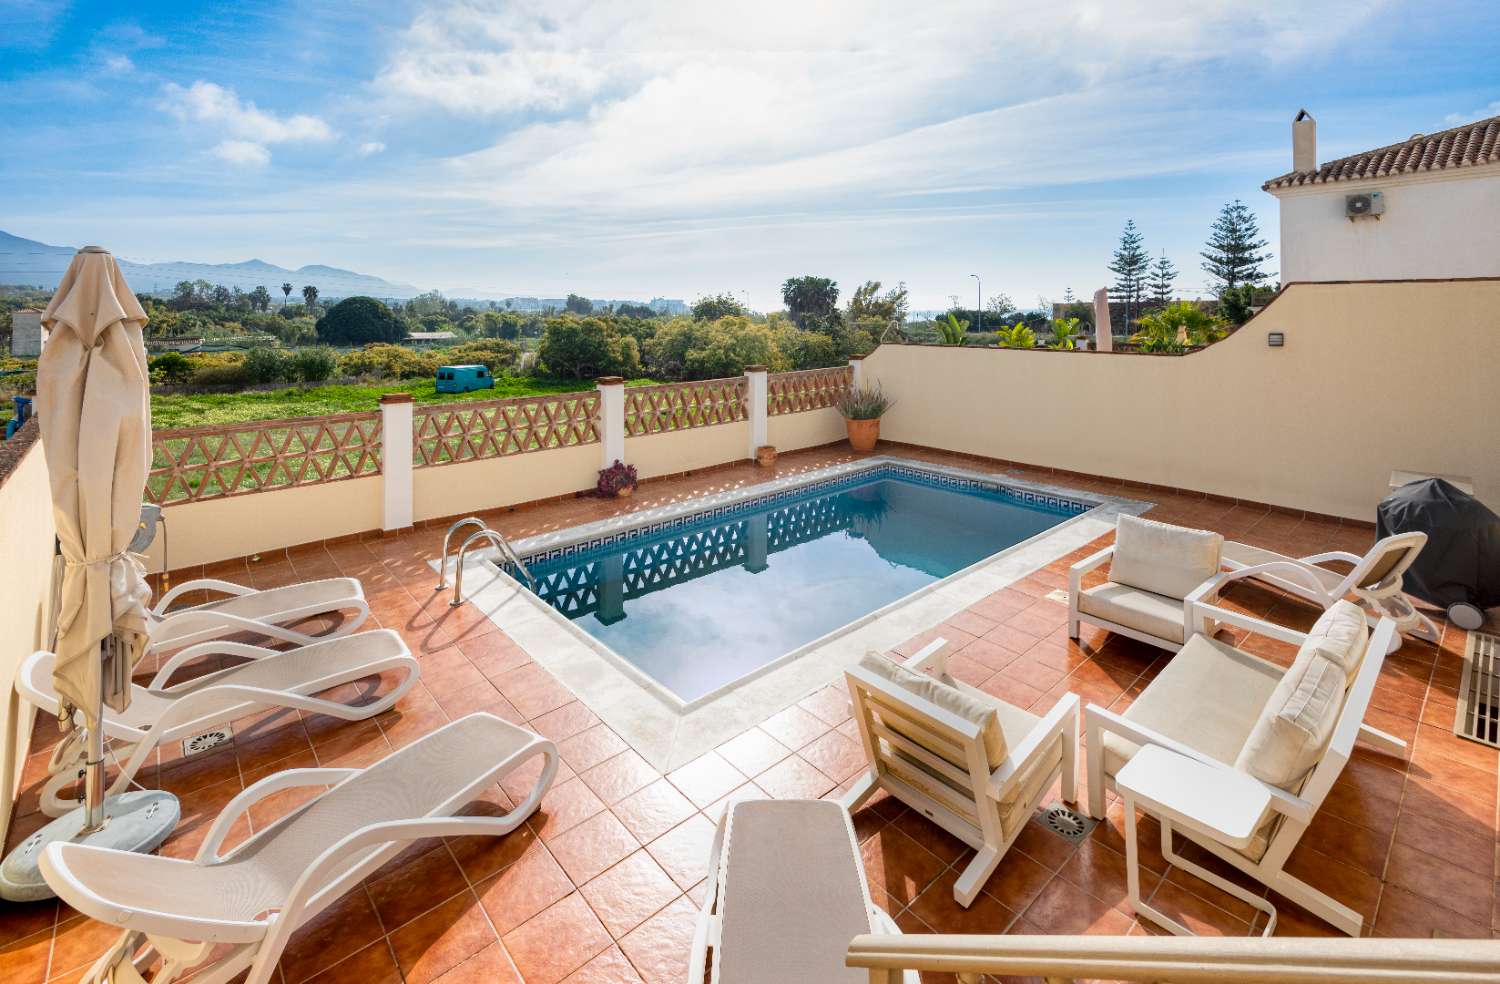 Detached villa with private pool for sale in Punta Lara, Nerja